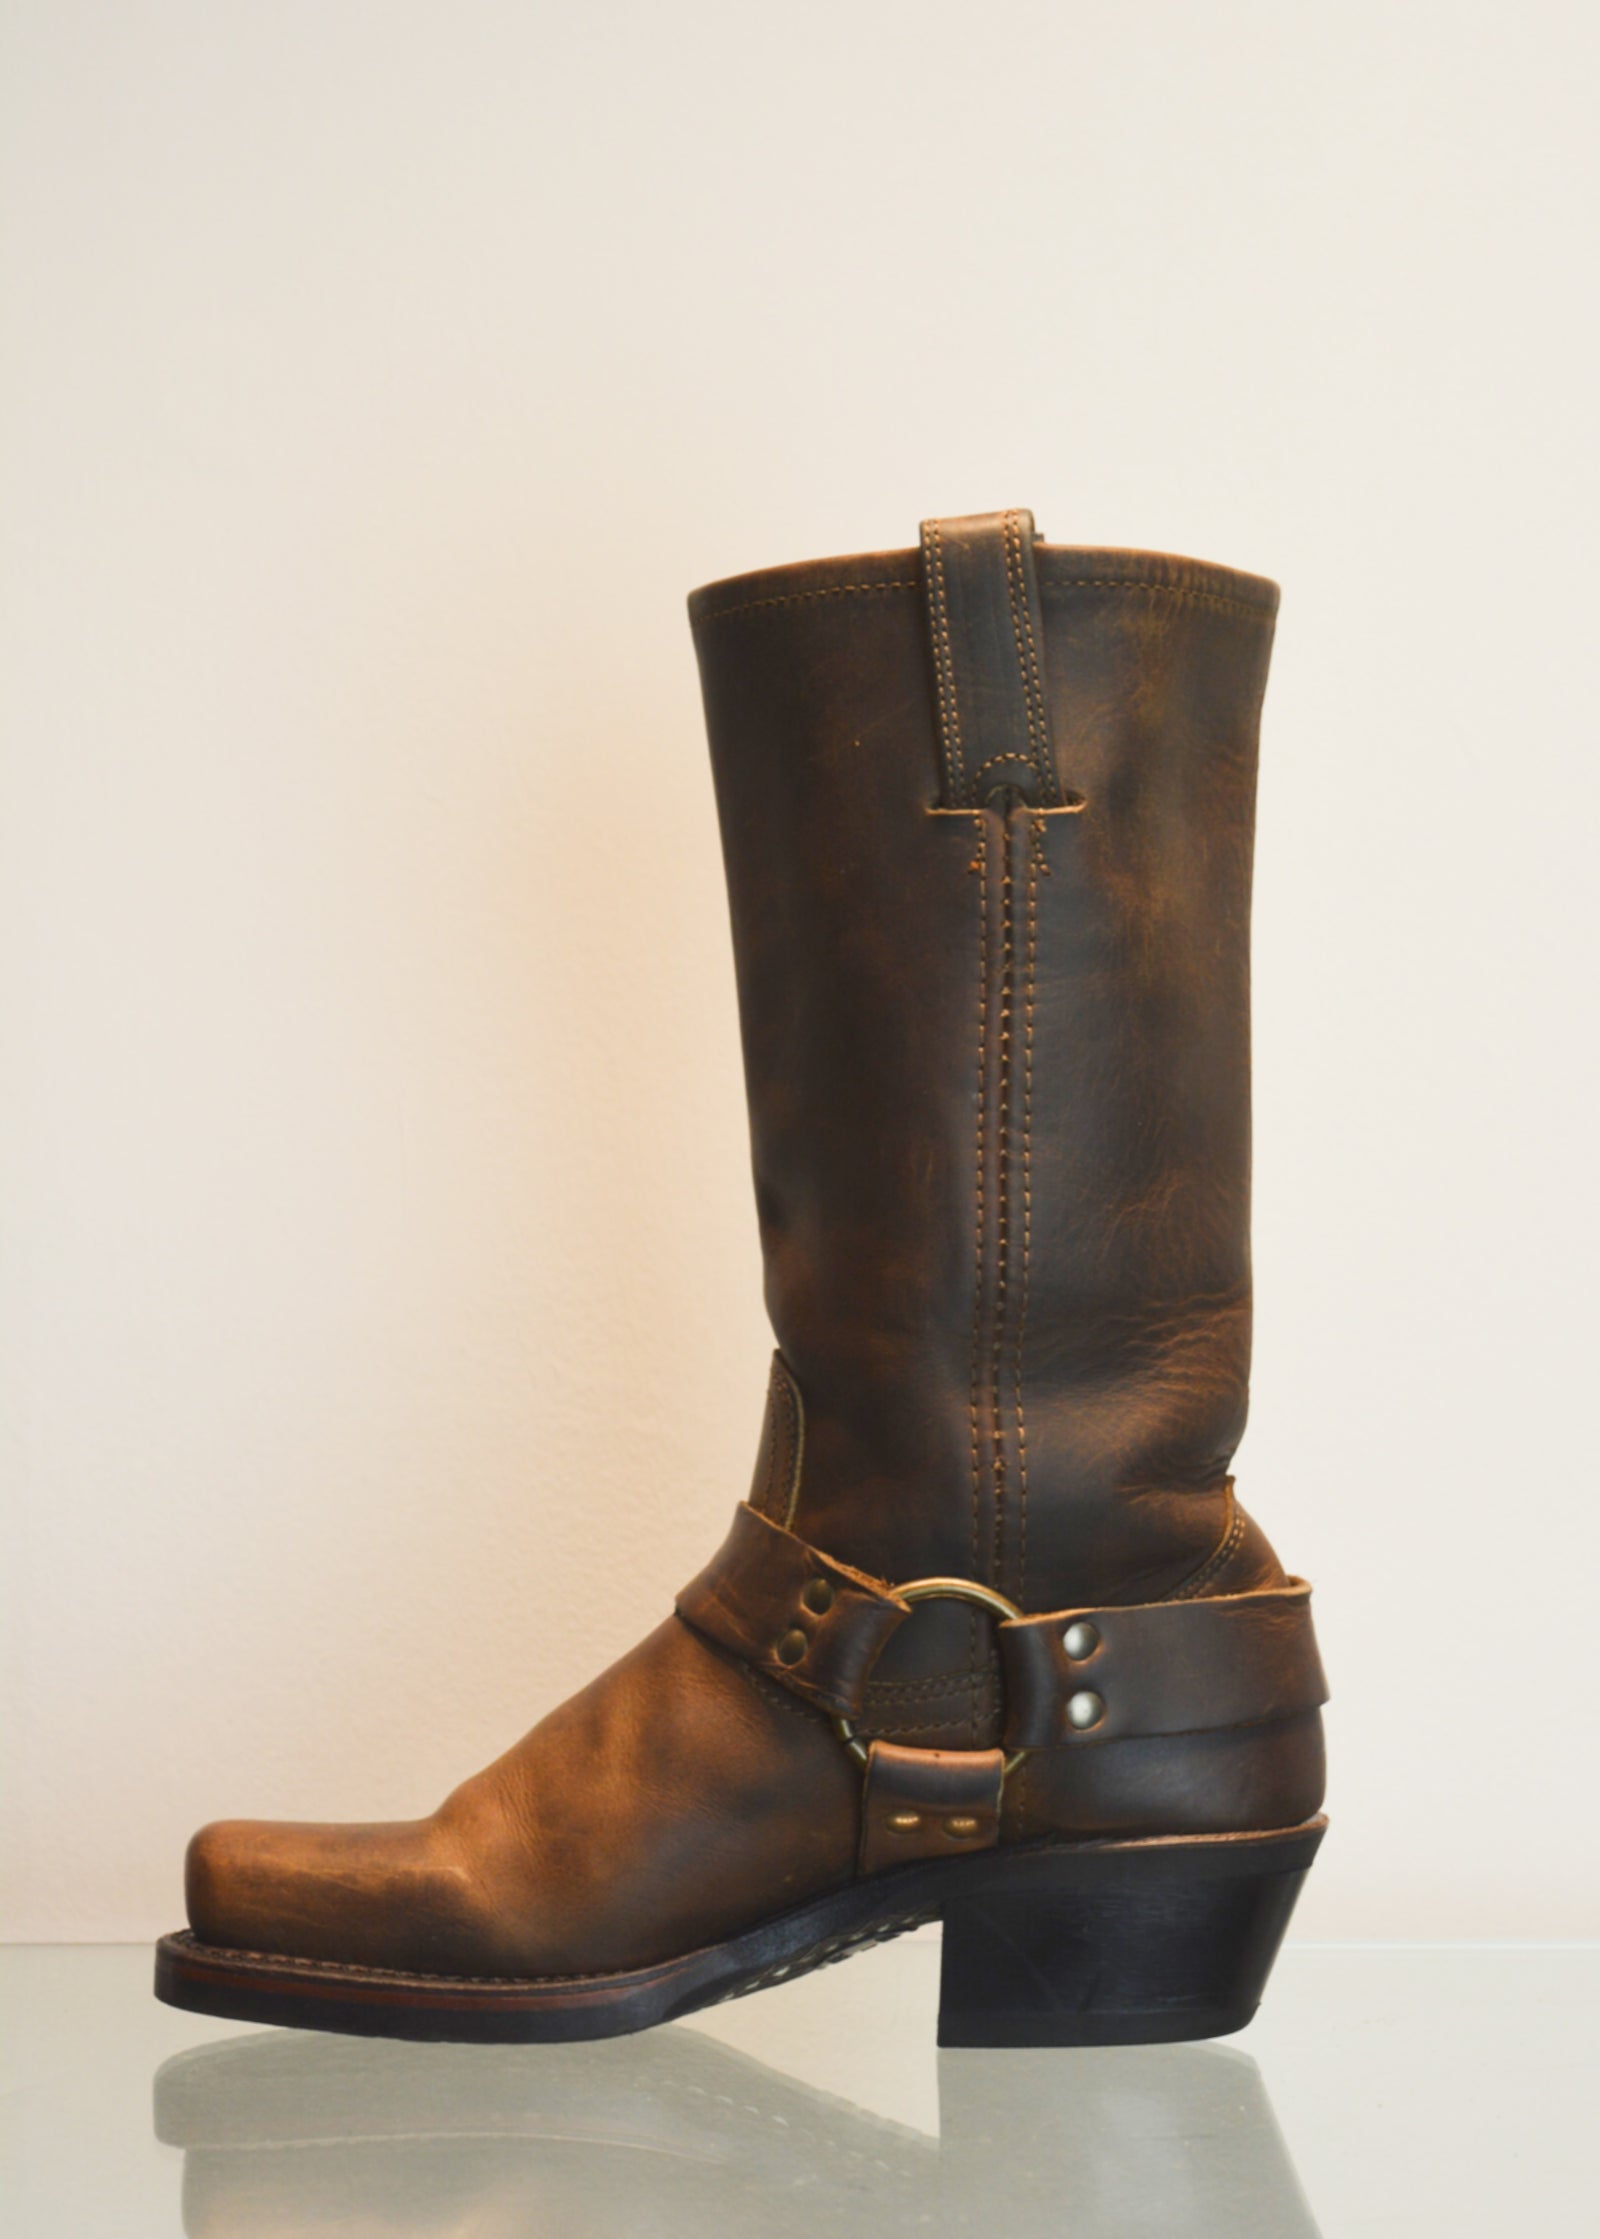 PREWORN | Preloved - 'FRYE' Harness 12R Boot - Size 3.5 UK